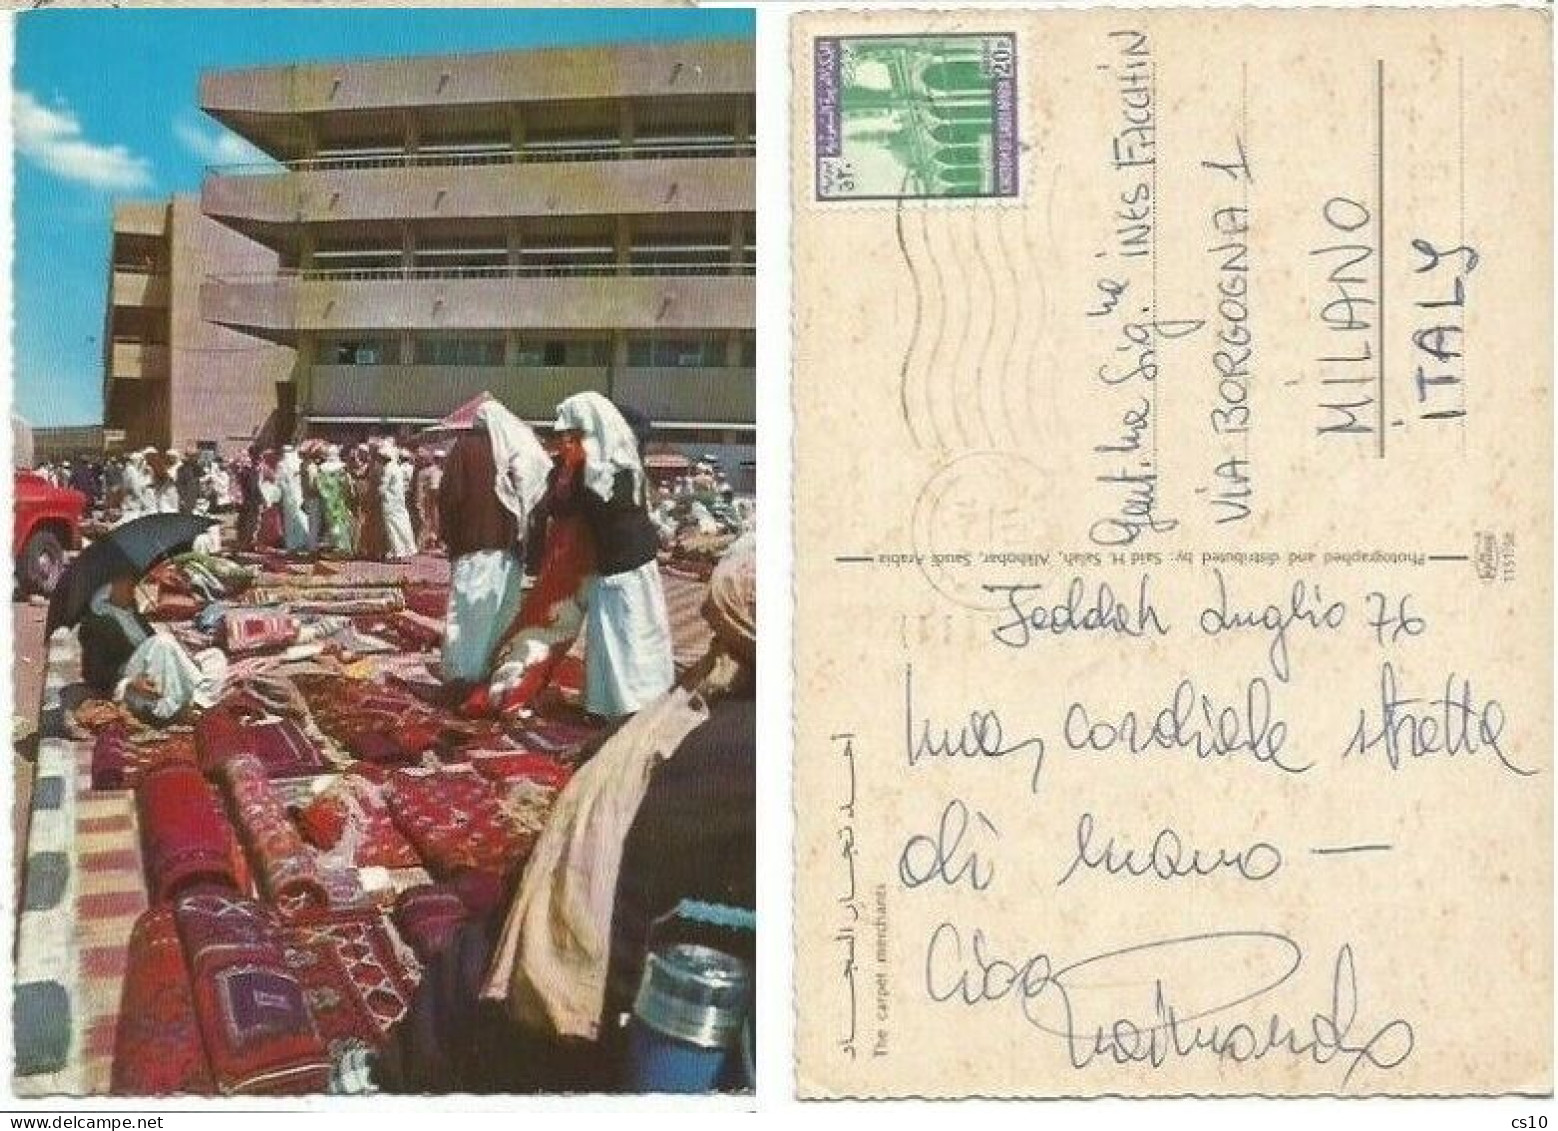 Saudi Arabia The Carpet Merchants - Pcard Jeddah July1976 X Italy With Regular Issue P.20 Solo Franking - Arabie Saoudite